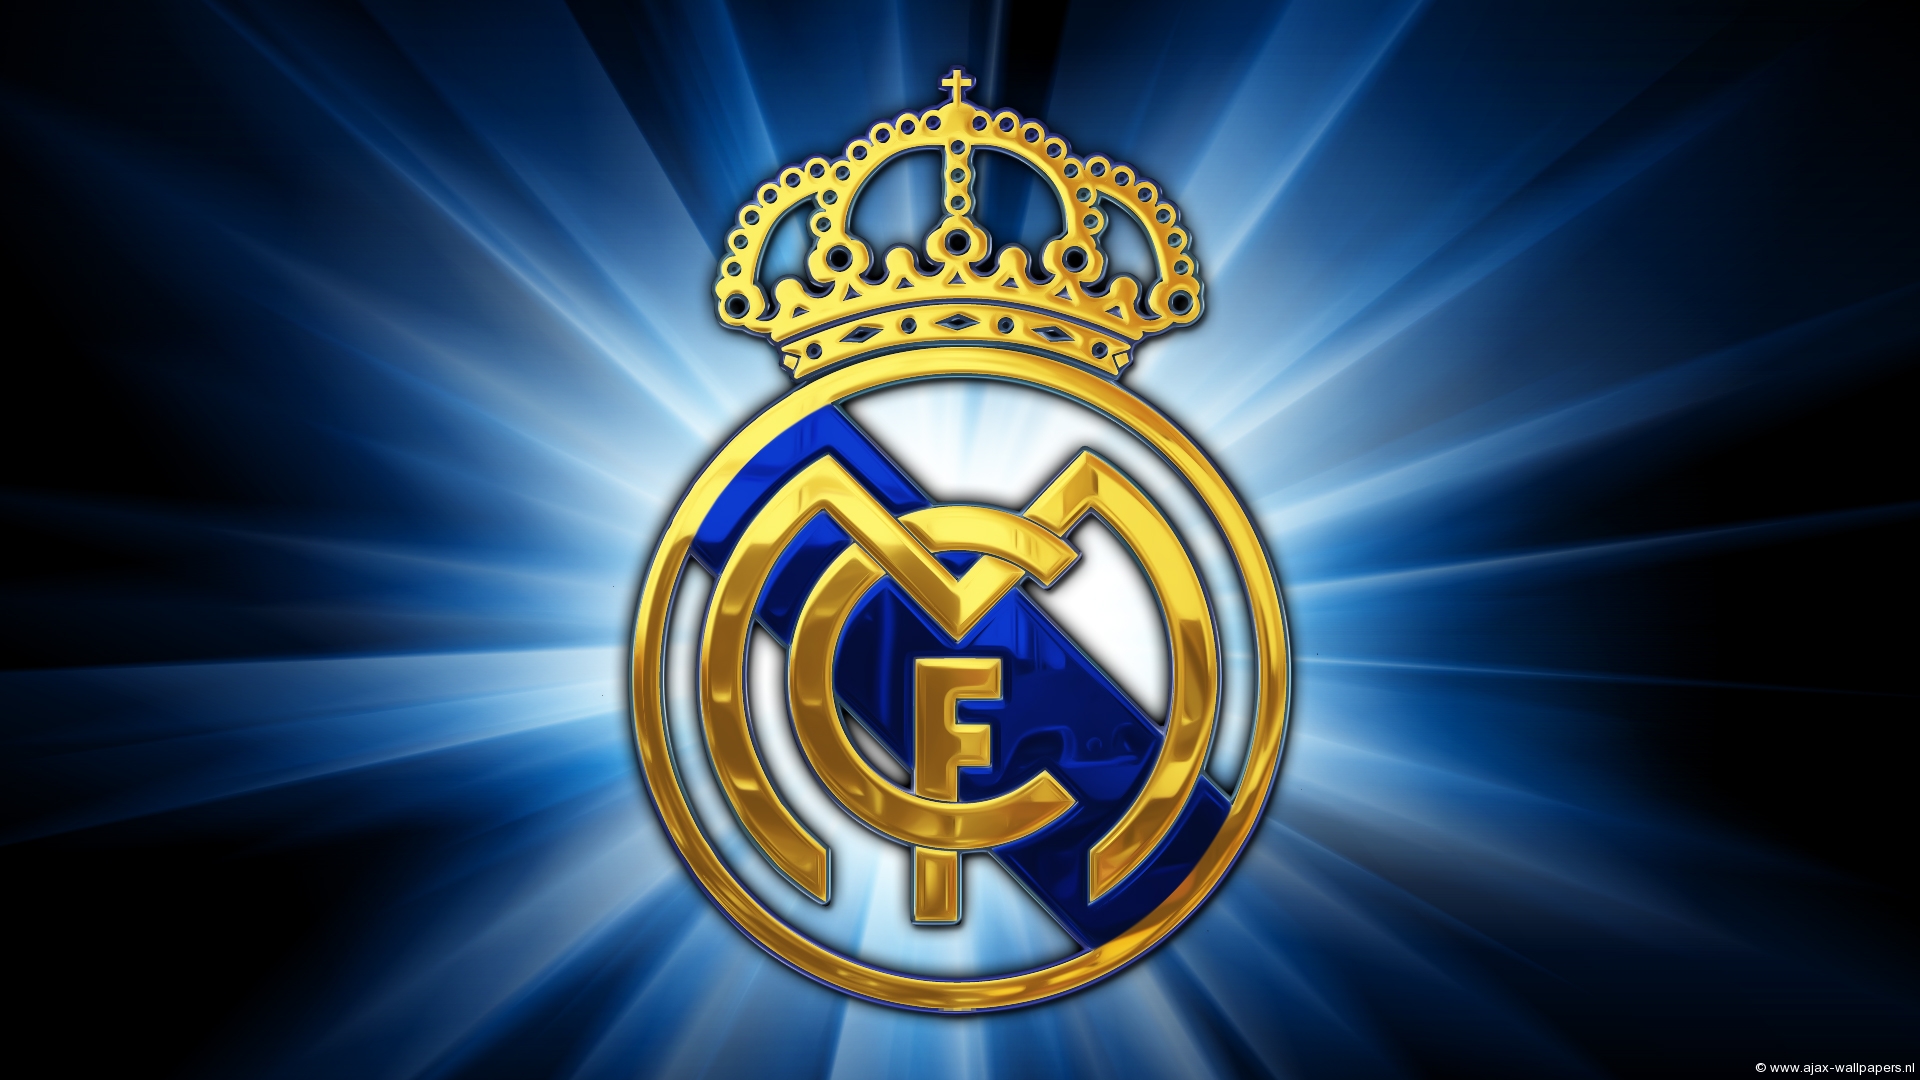 Real Madrid logo image